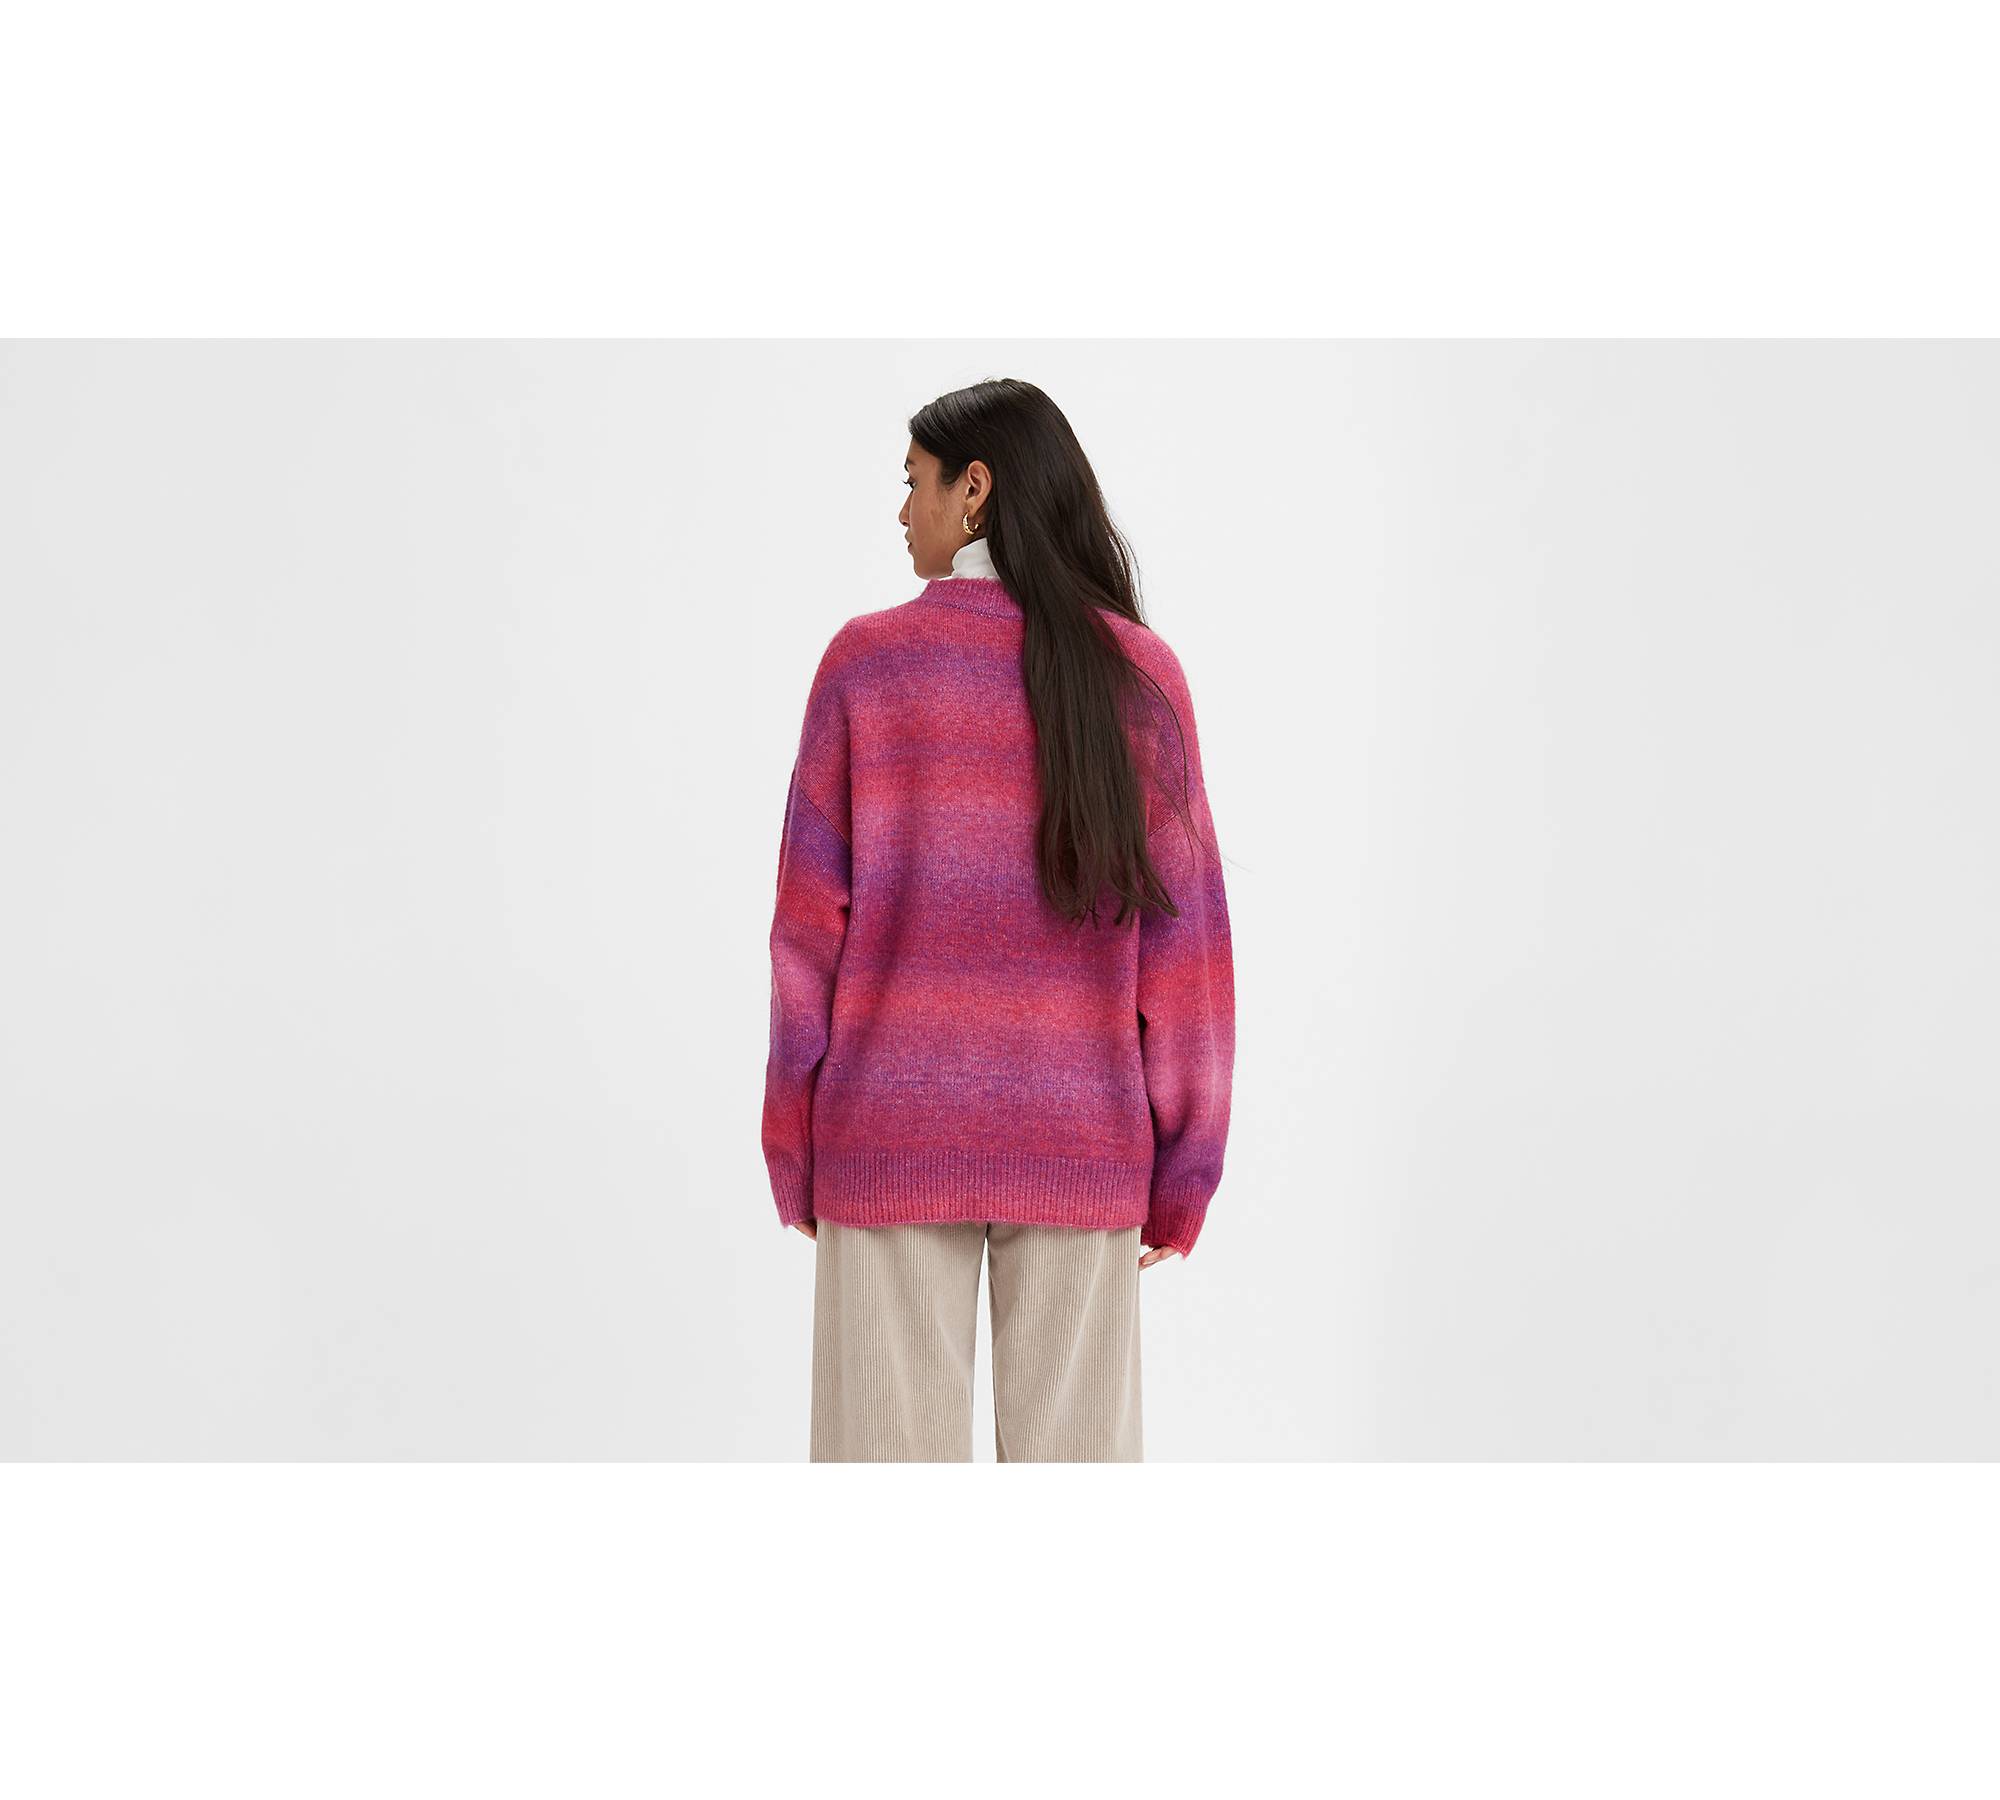 Sweaters, Louis Vuitton X Clouds Crewneck